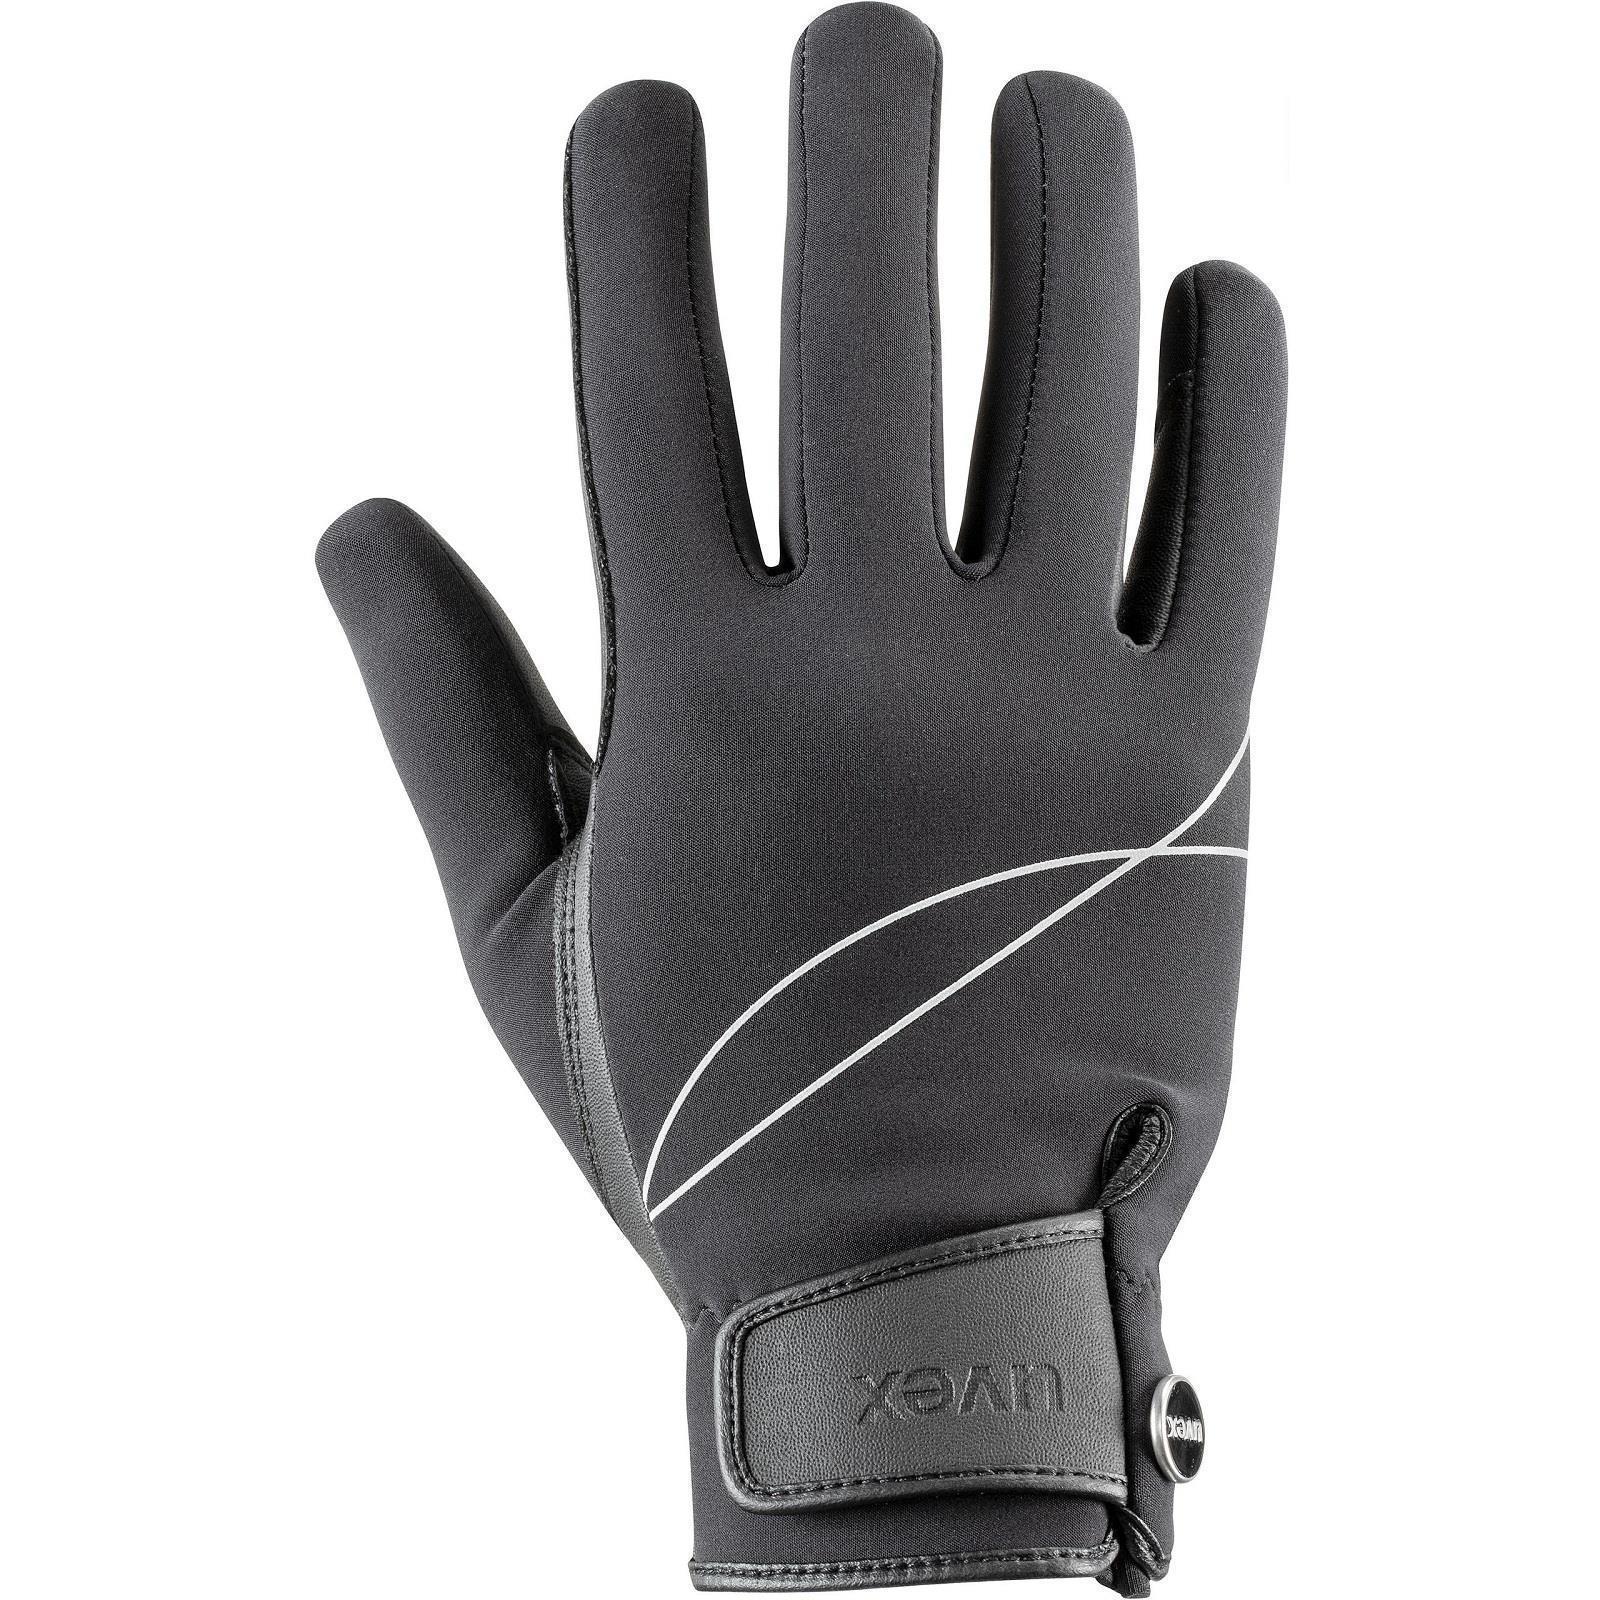 Uvex Winter Riding Gloves crx700